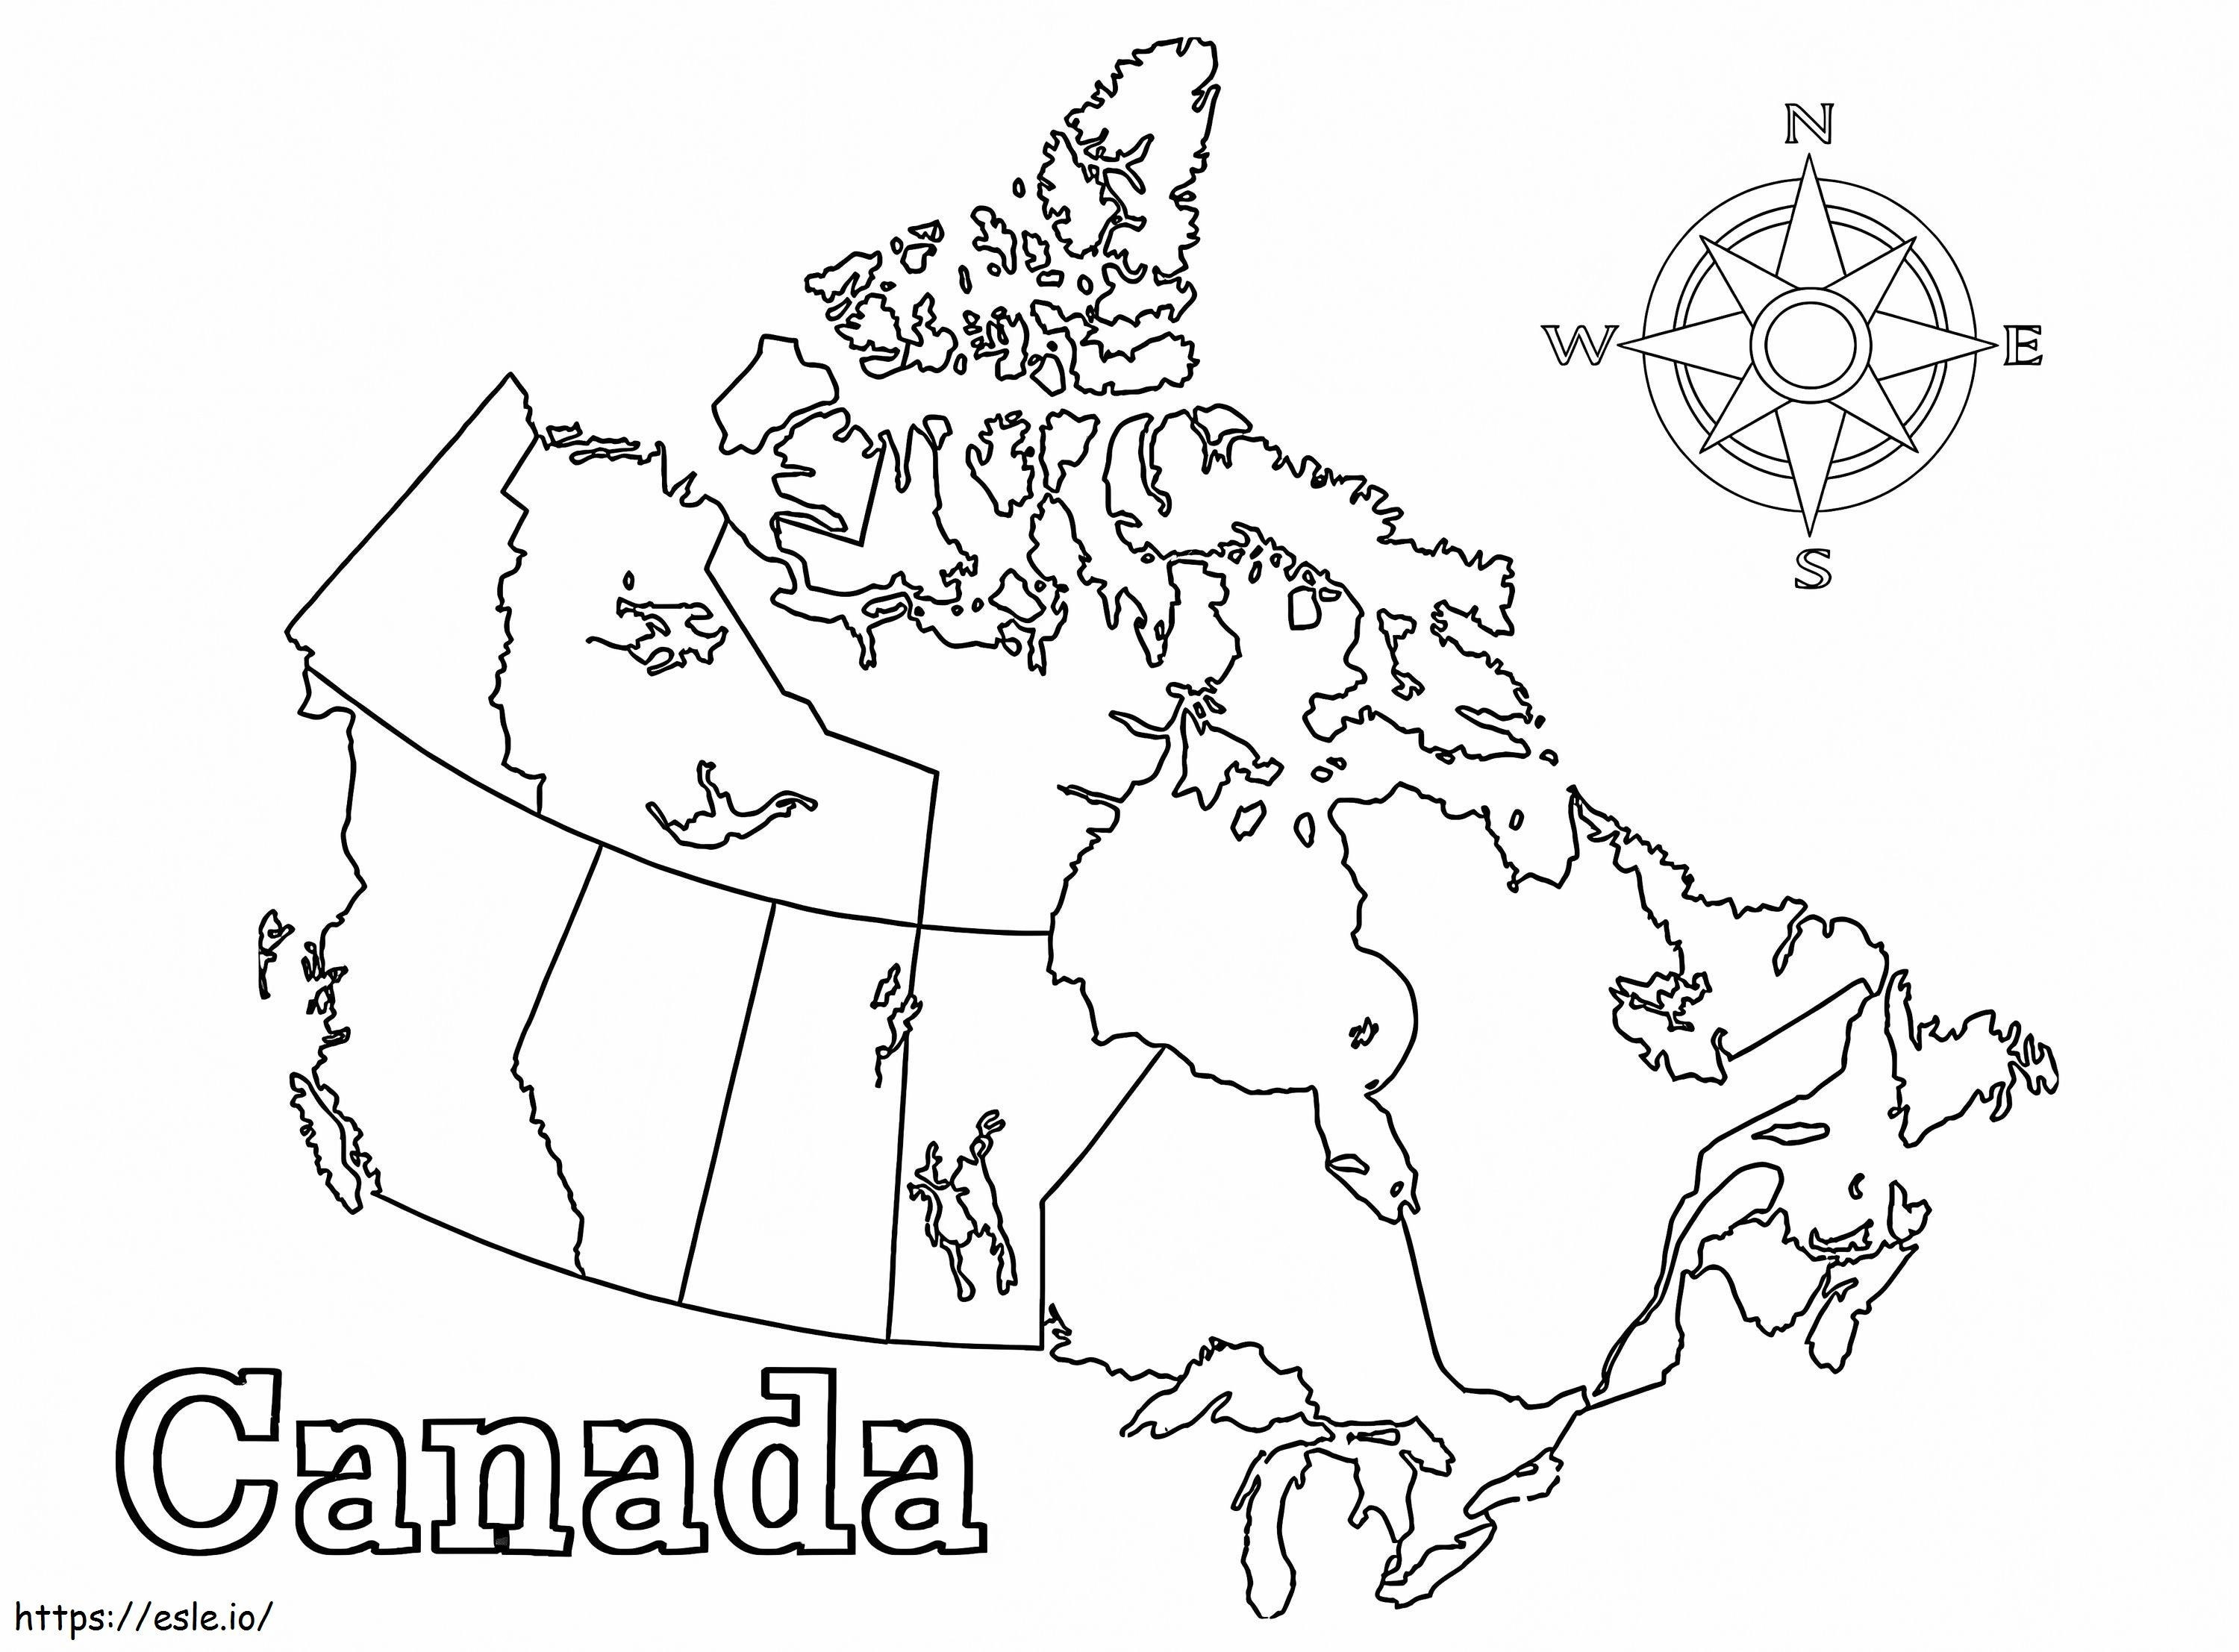 Página para colorir do mapa do Canadá para colorir